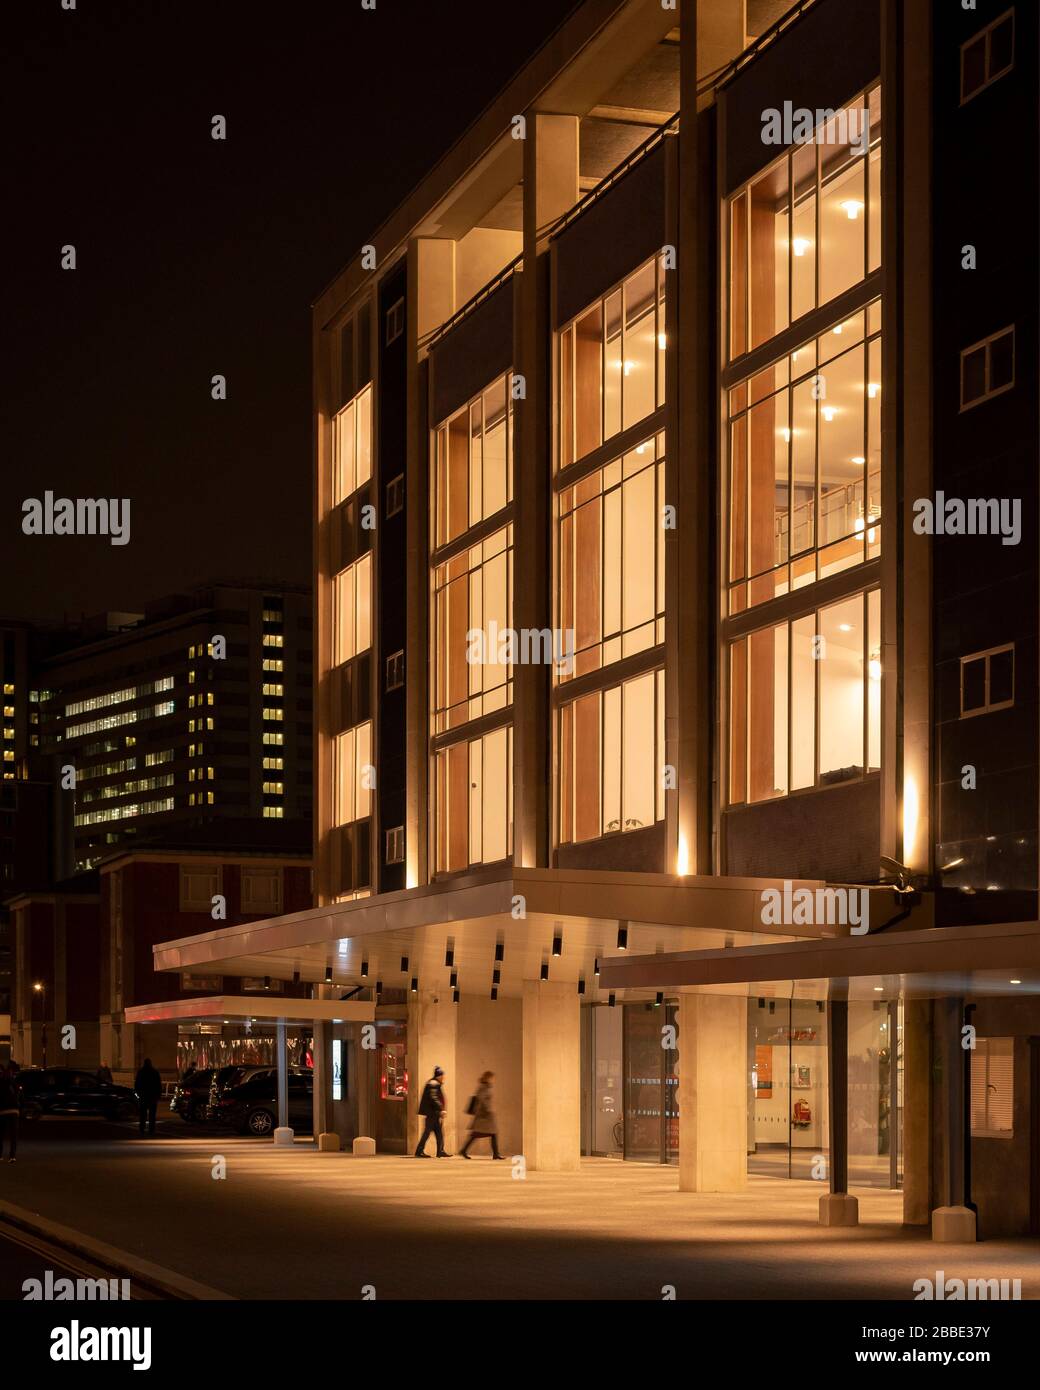 Fairfield Hall entrance at night. Fairfield Halls, Croydon, United Kingdom. Architect: MICA, 2019. Stock Photo